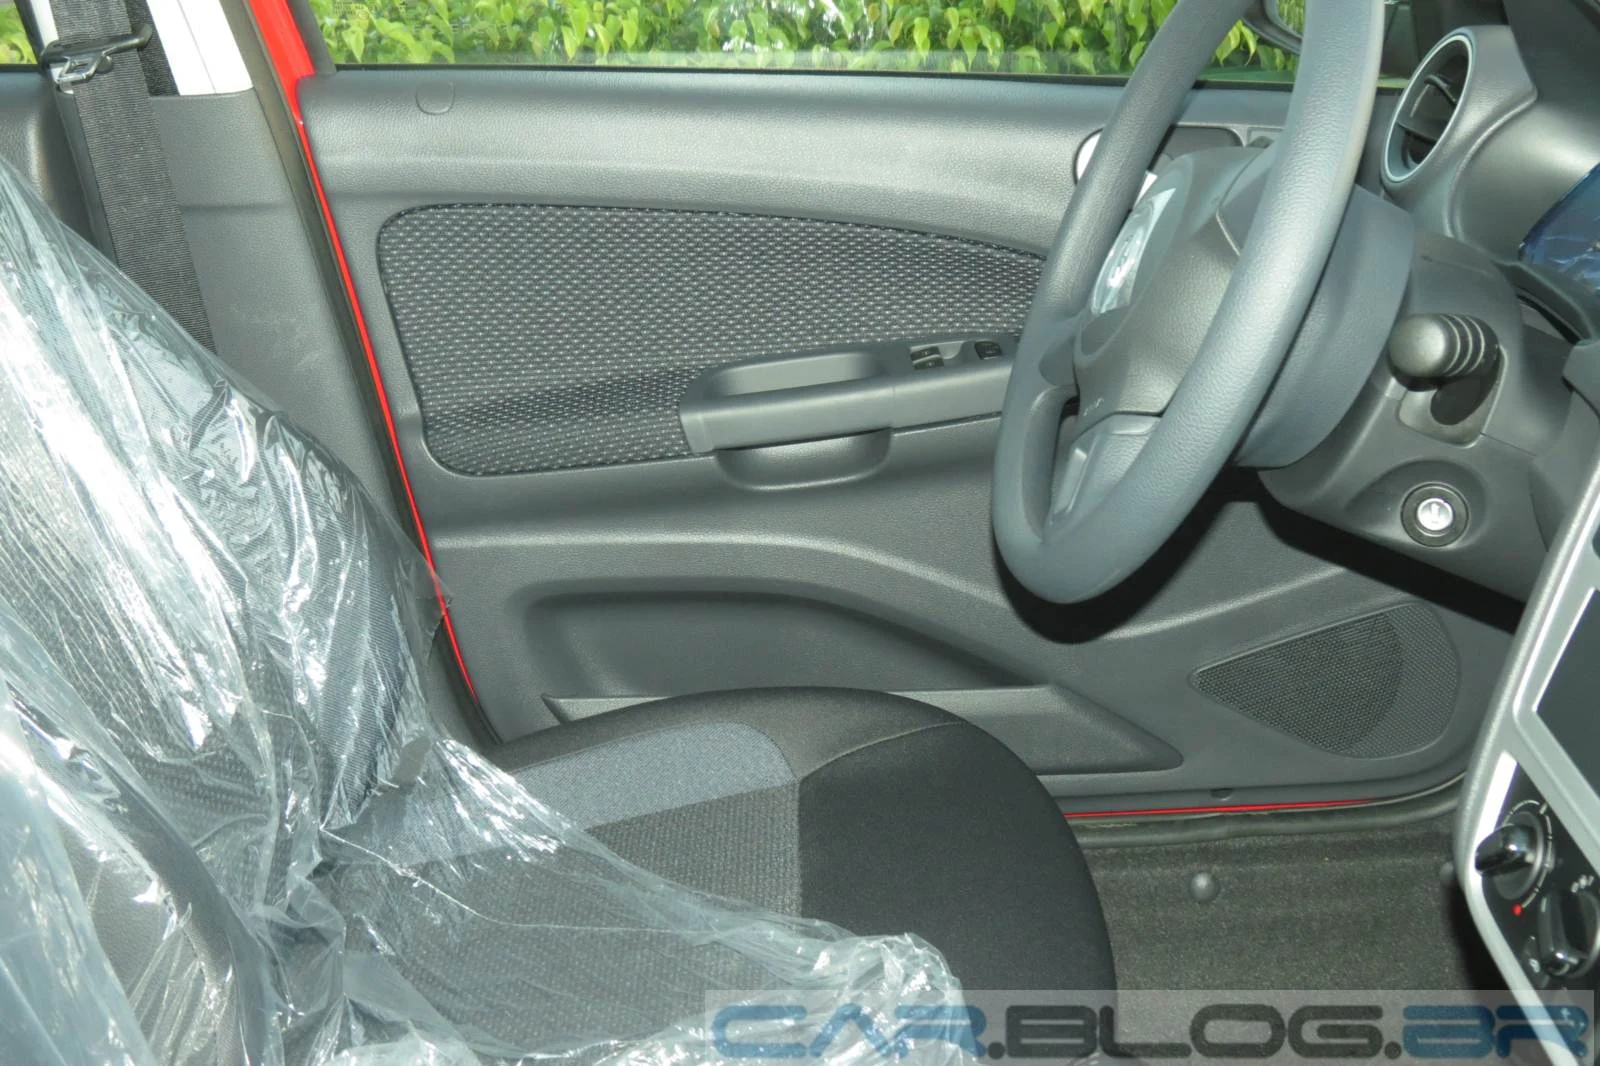 VW Gol Trendline MSI 2015 - interior